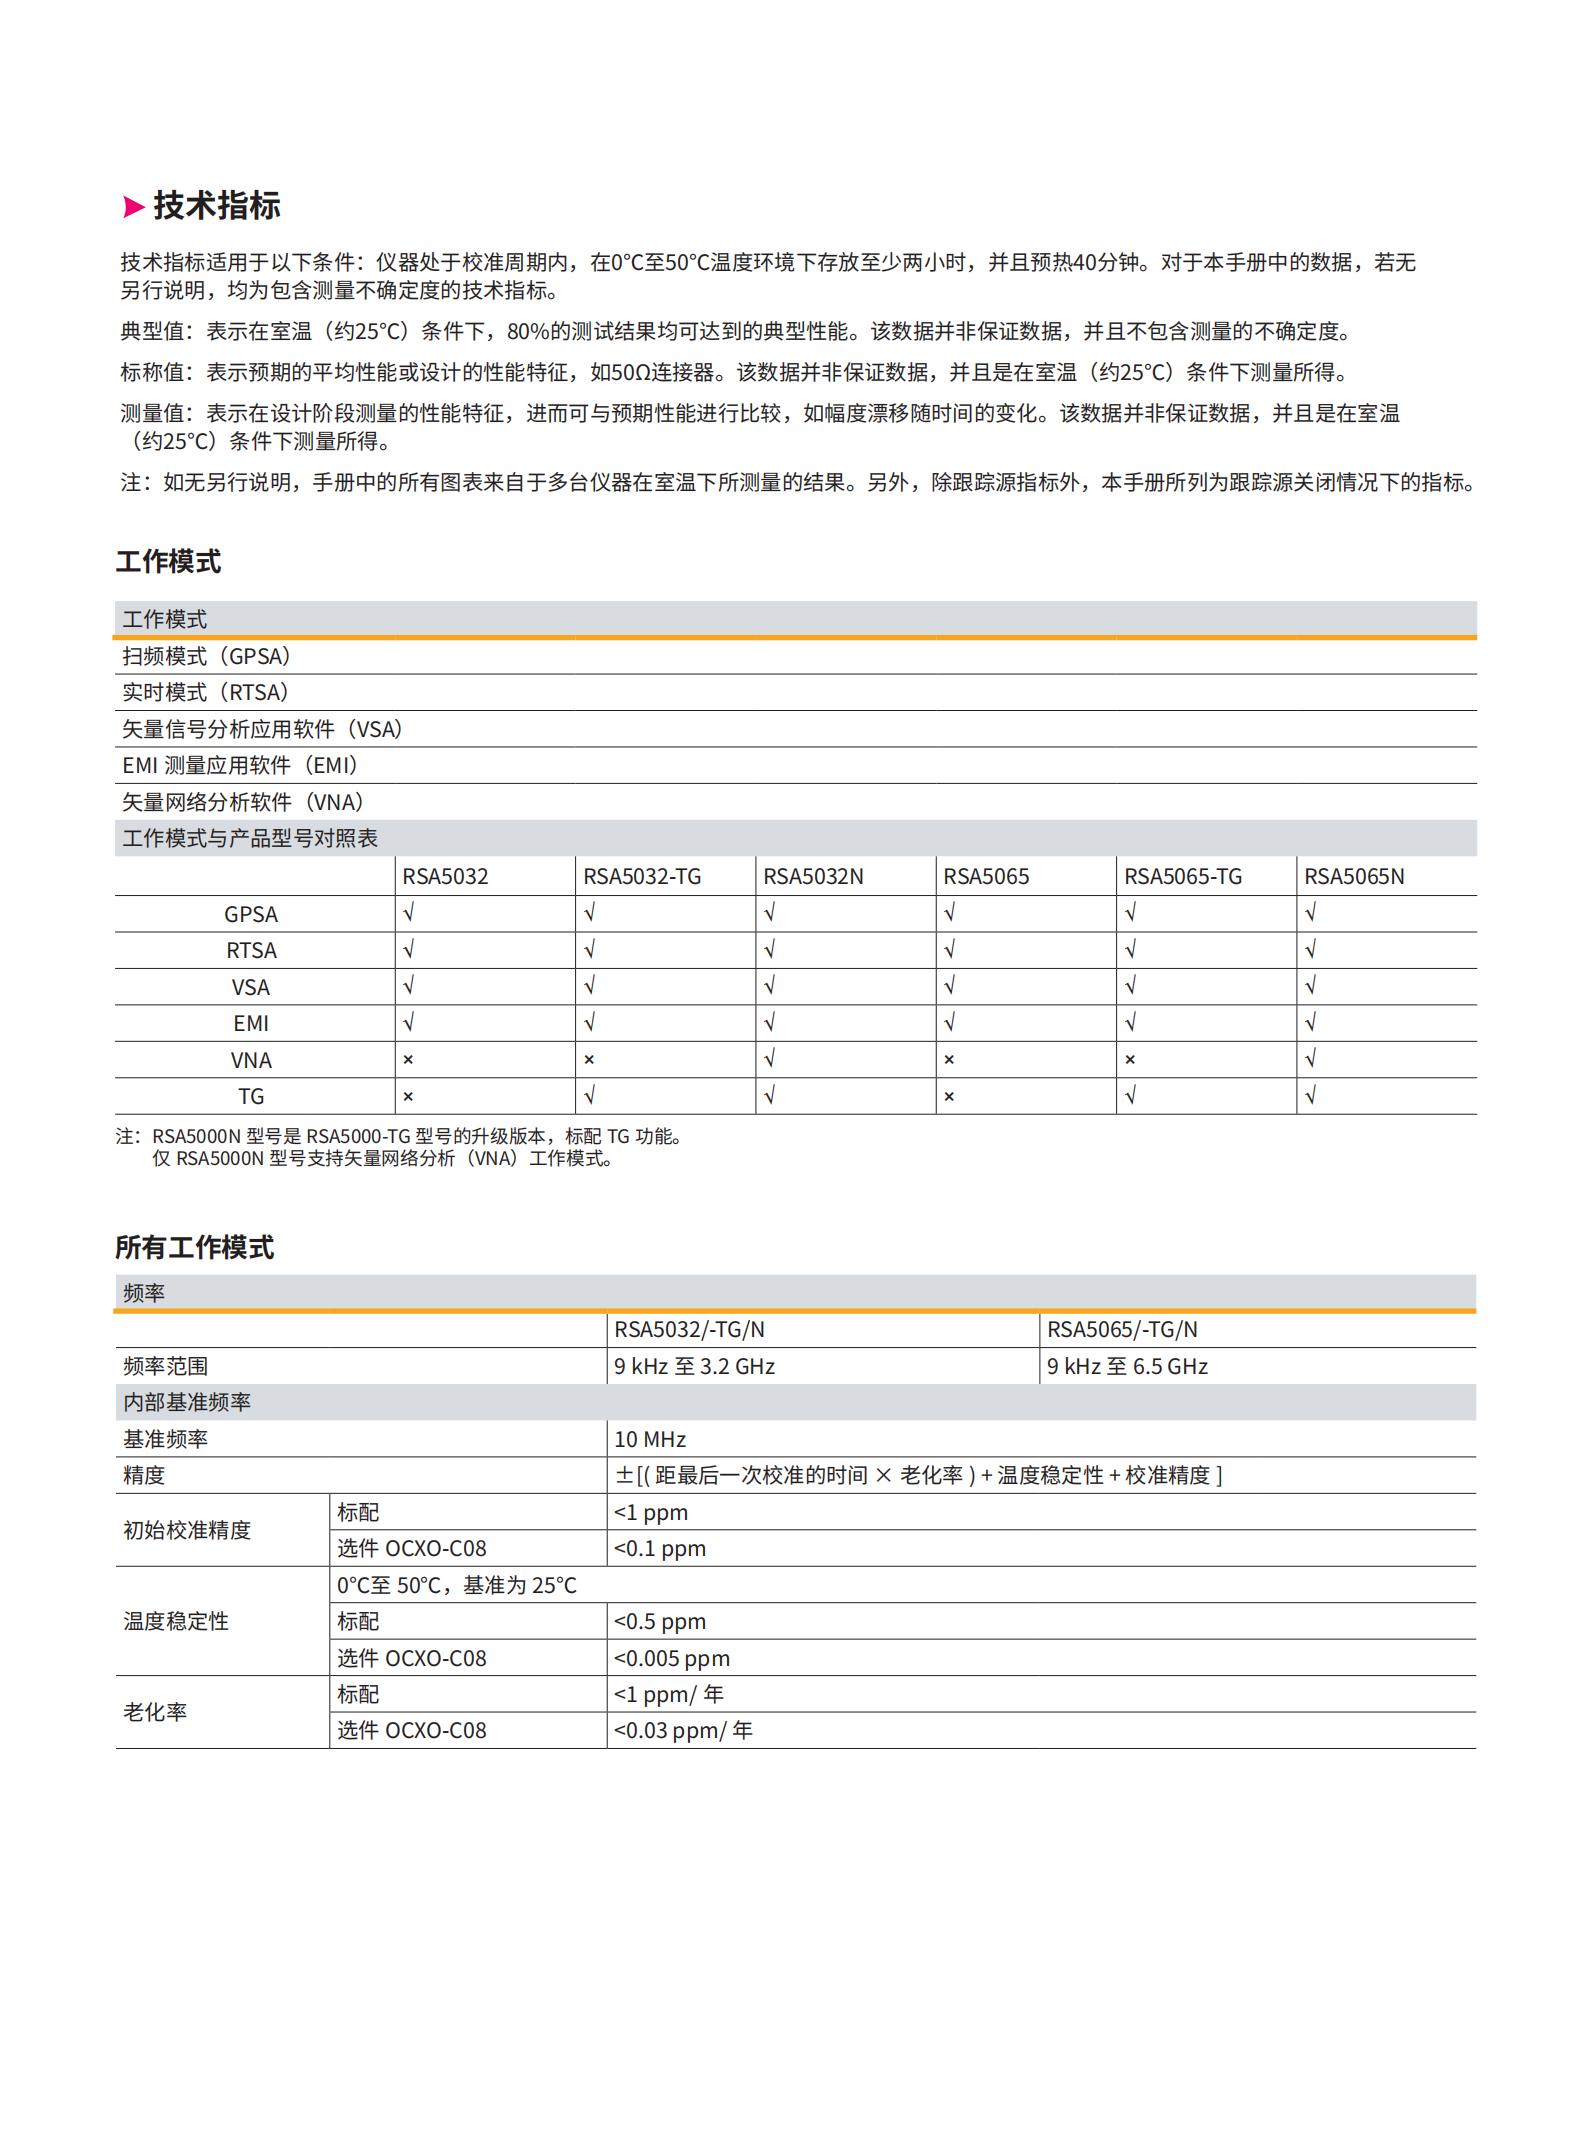 RSA5000数据手册-202007-CN_04.jpg